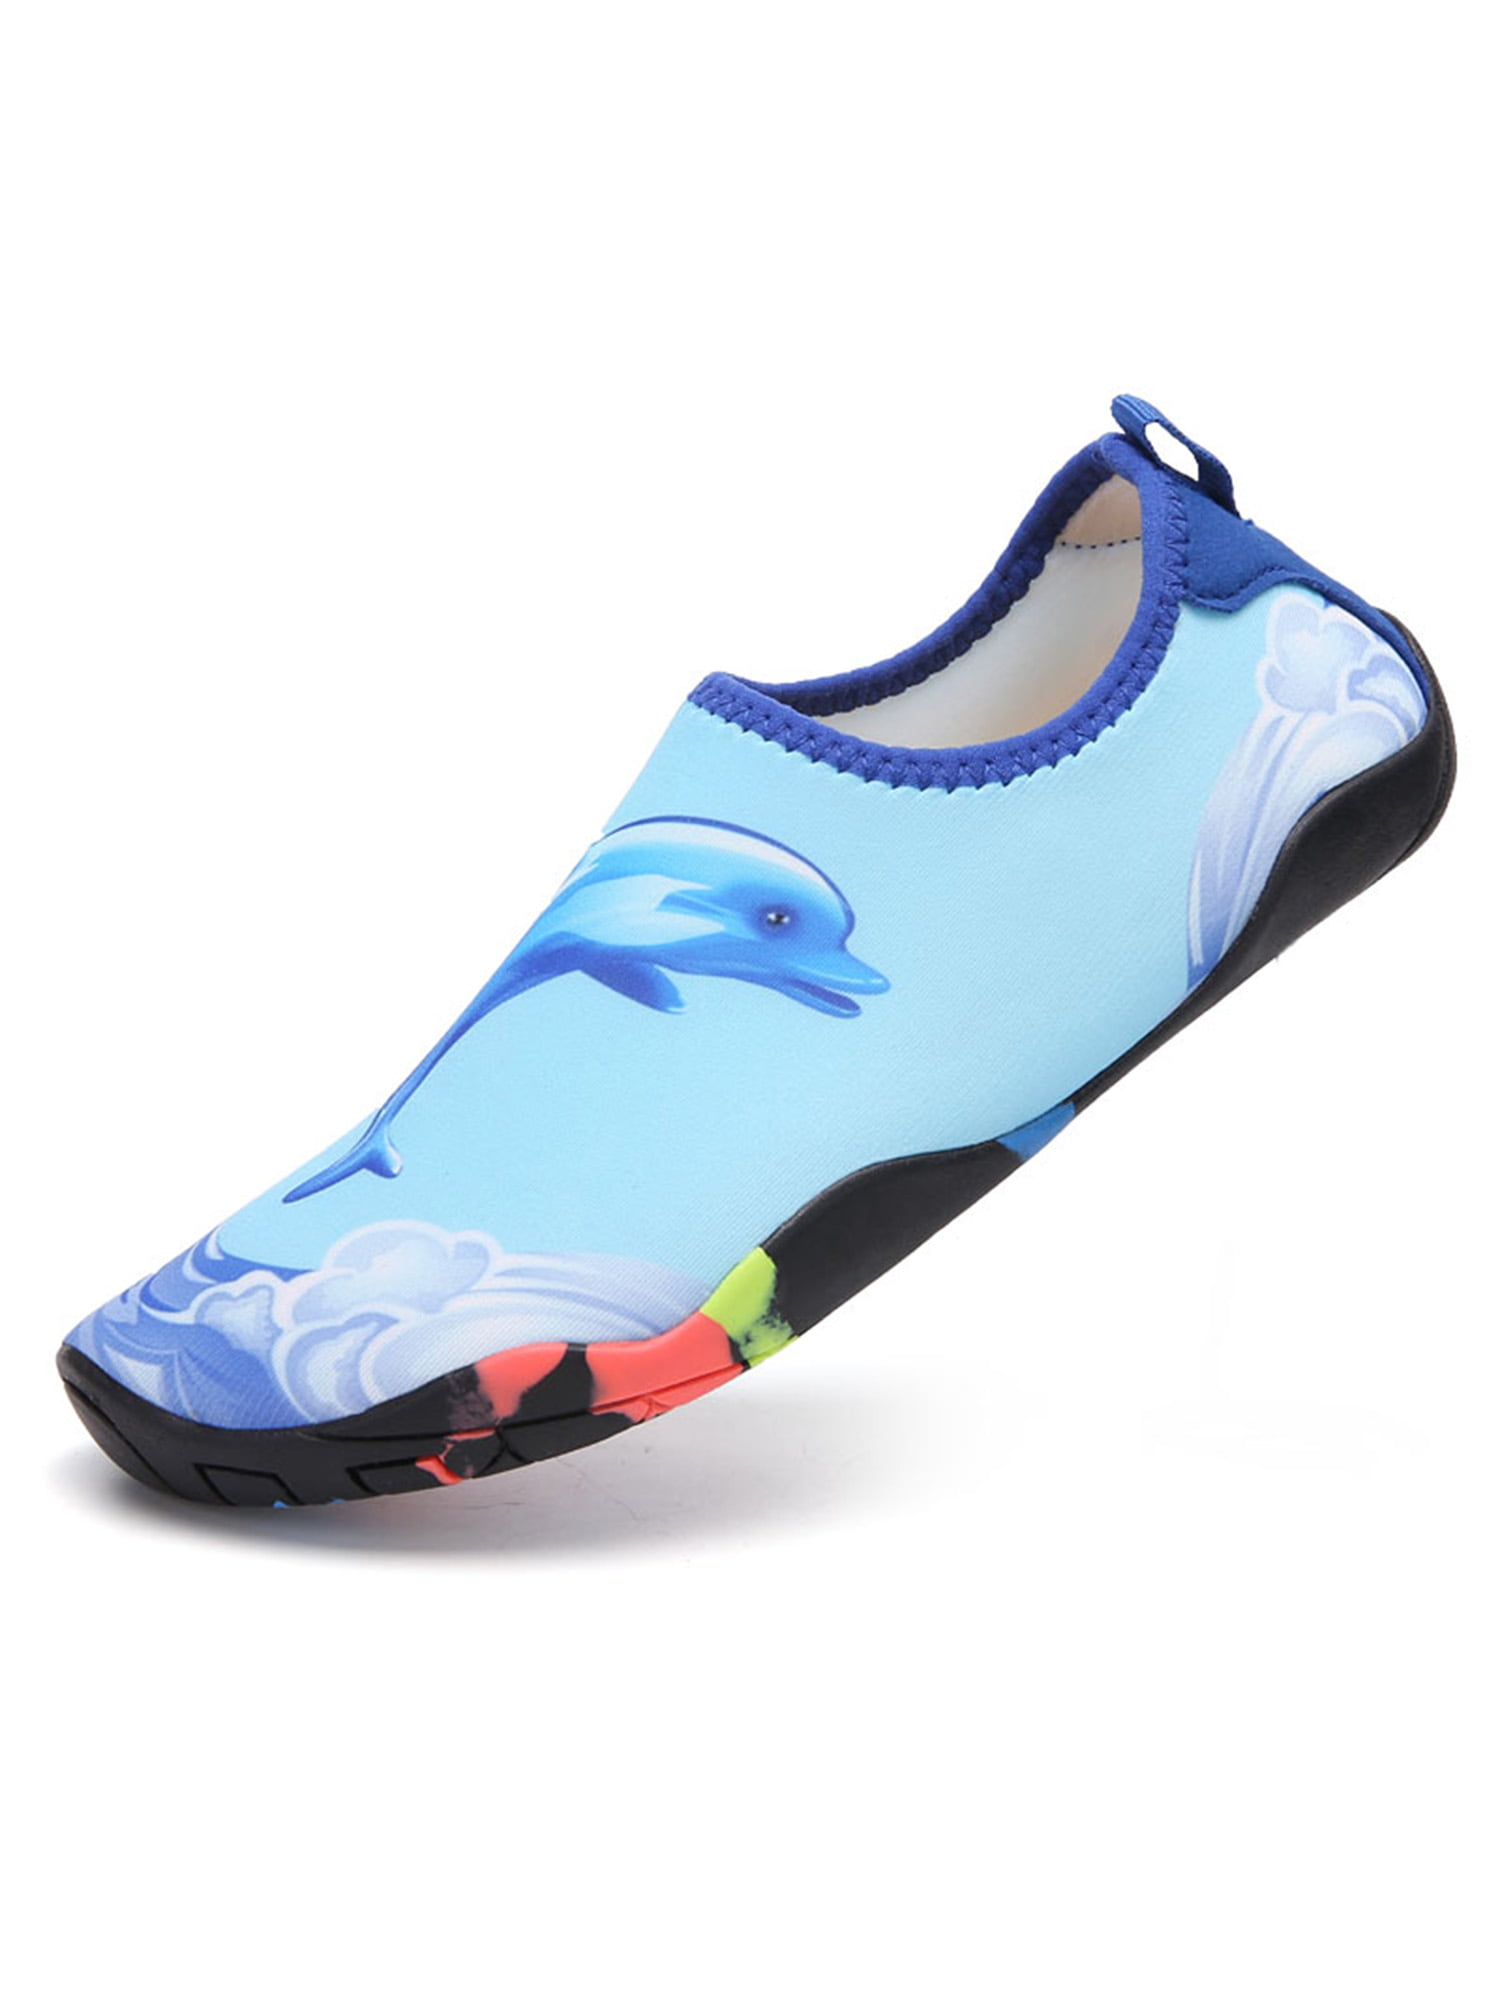 Men's Water Shoes Quick Dry Barefoot Aqua Socks Swim Shoes Pool Beach Walking 